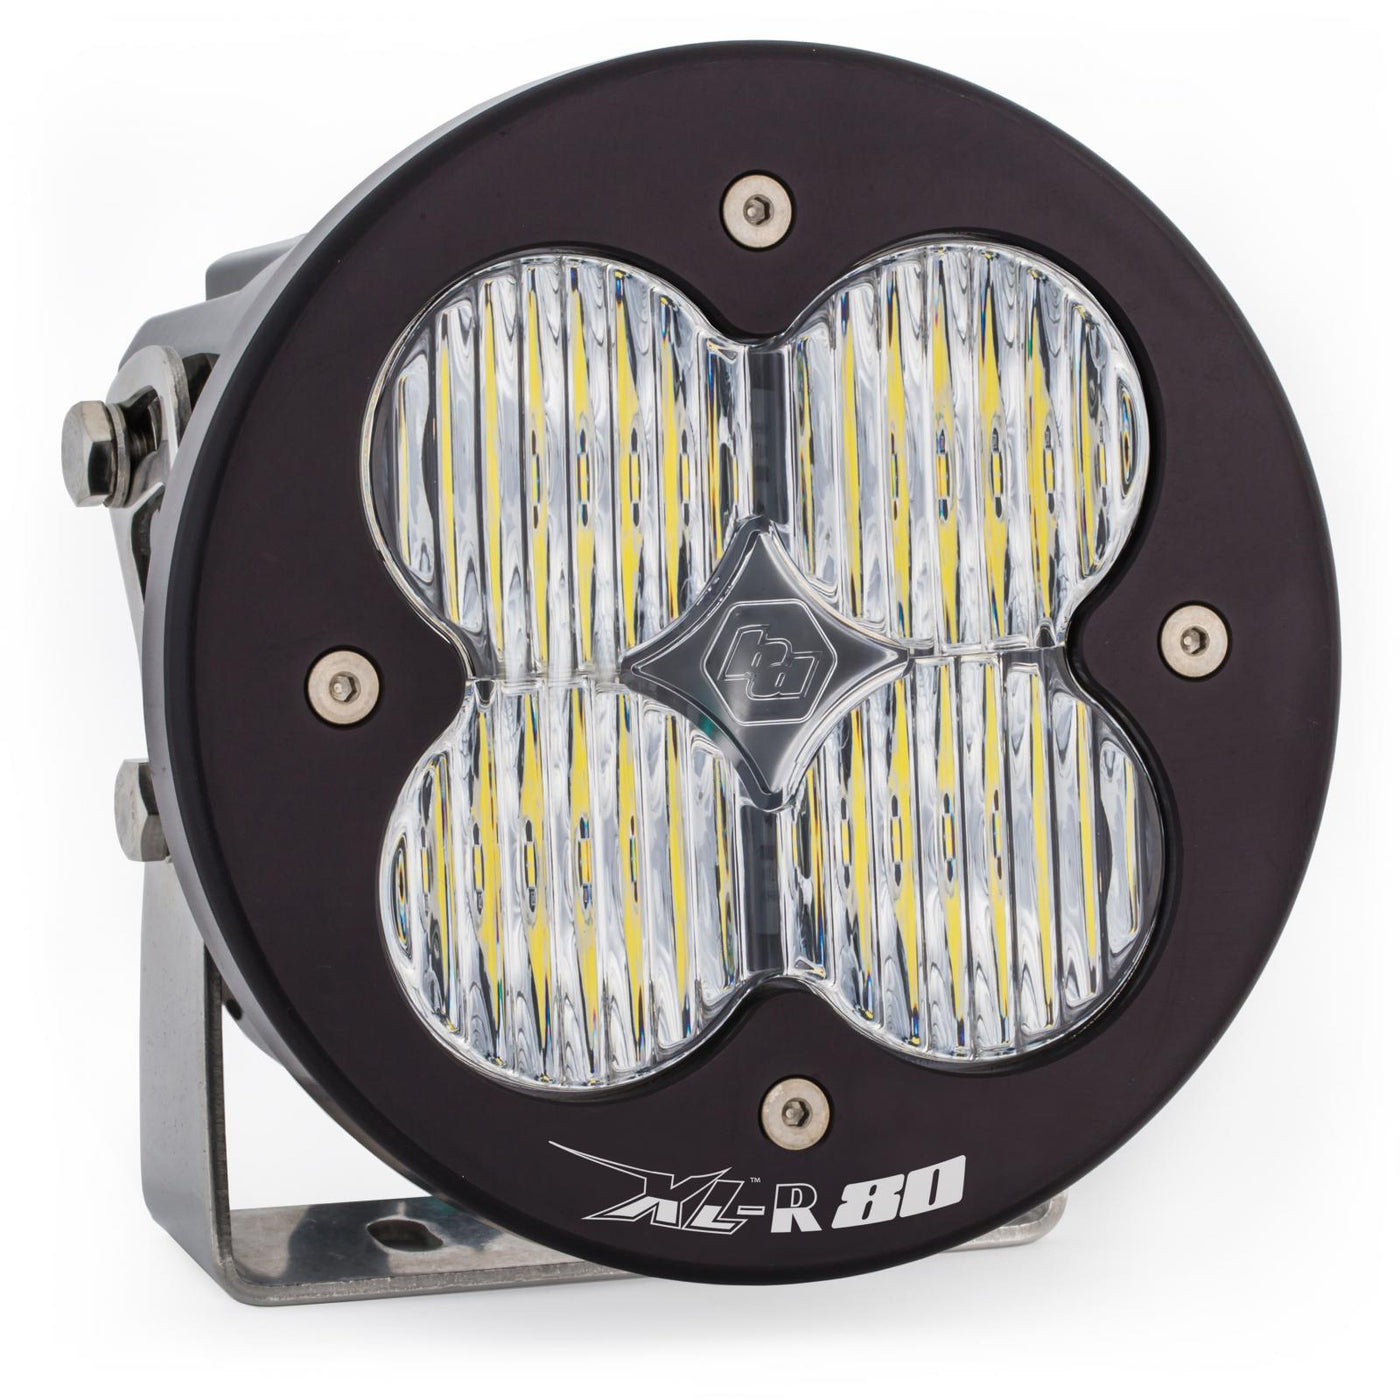 Baja Designs 760005 LED Light Pods Clear Lens Spot XL R 80 Wide Cornering